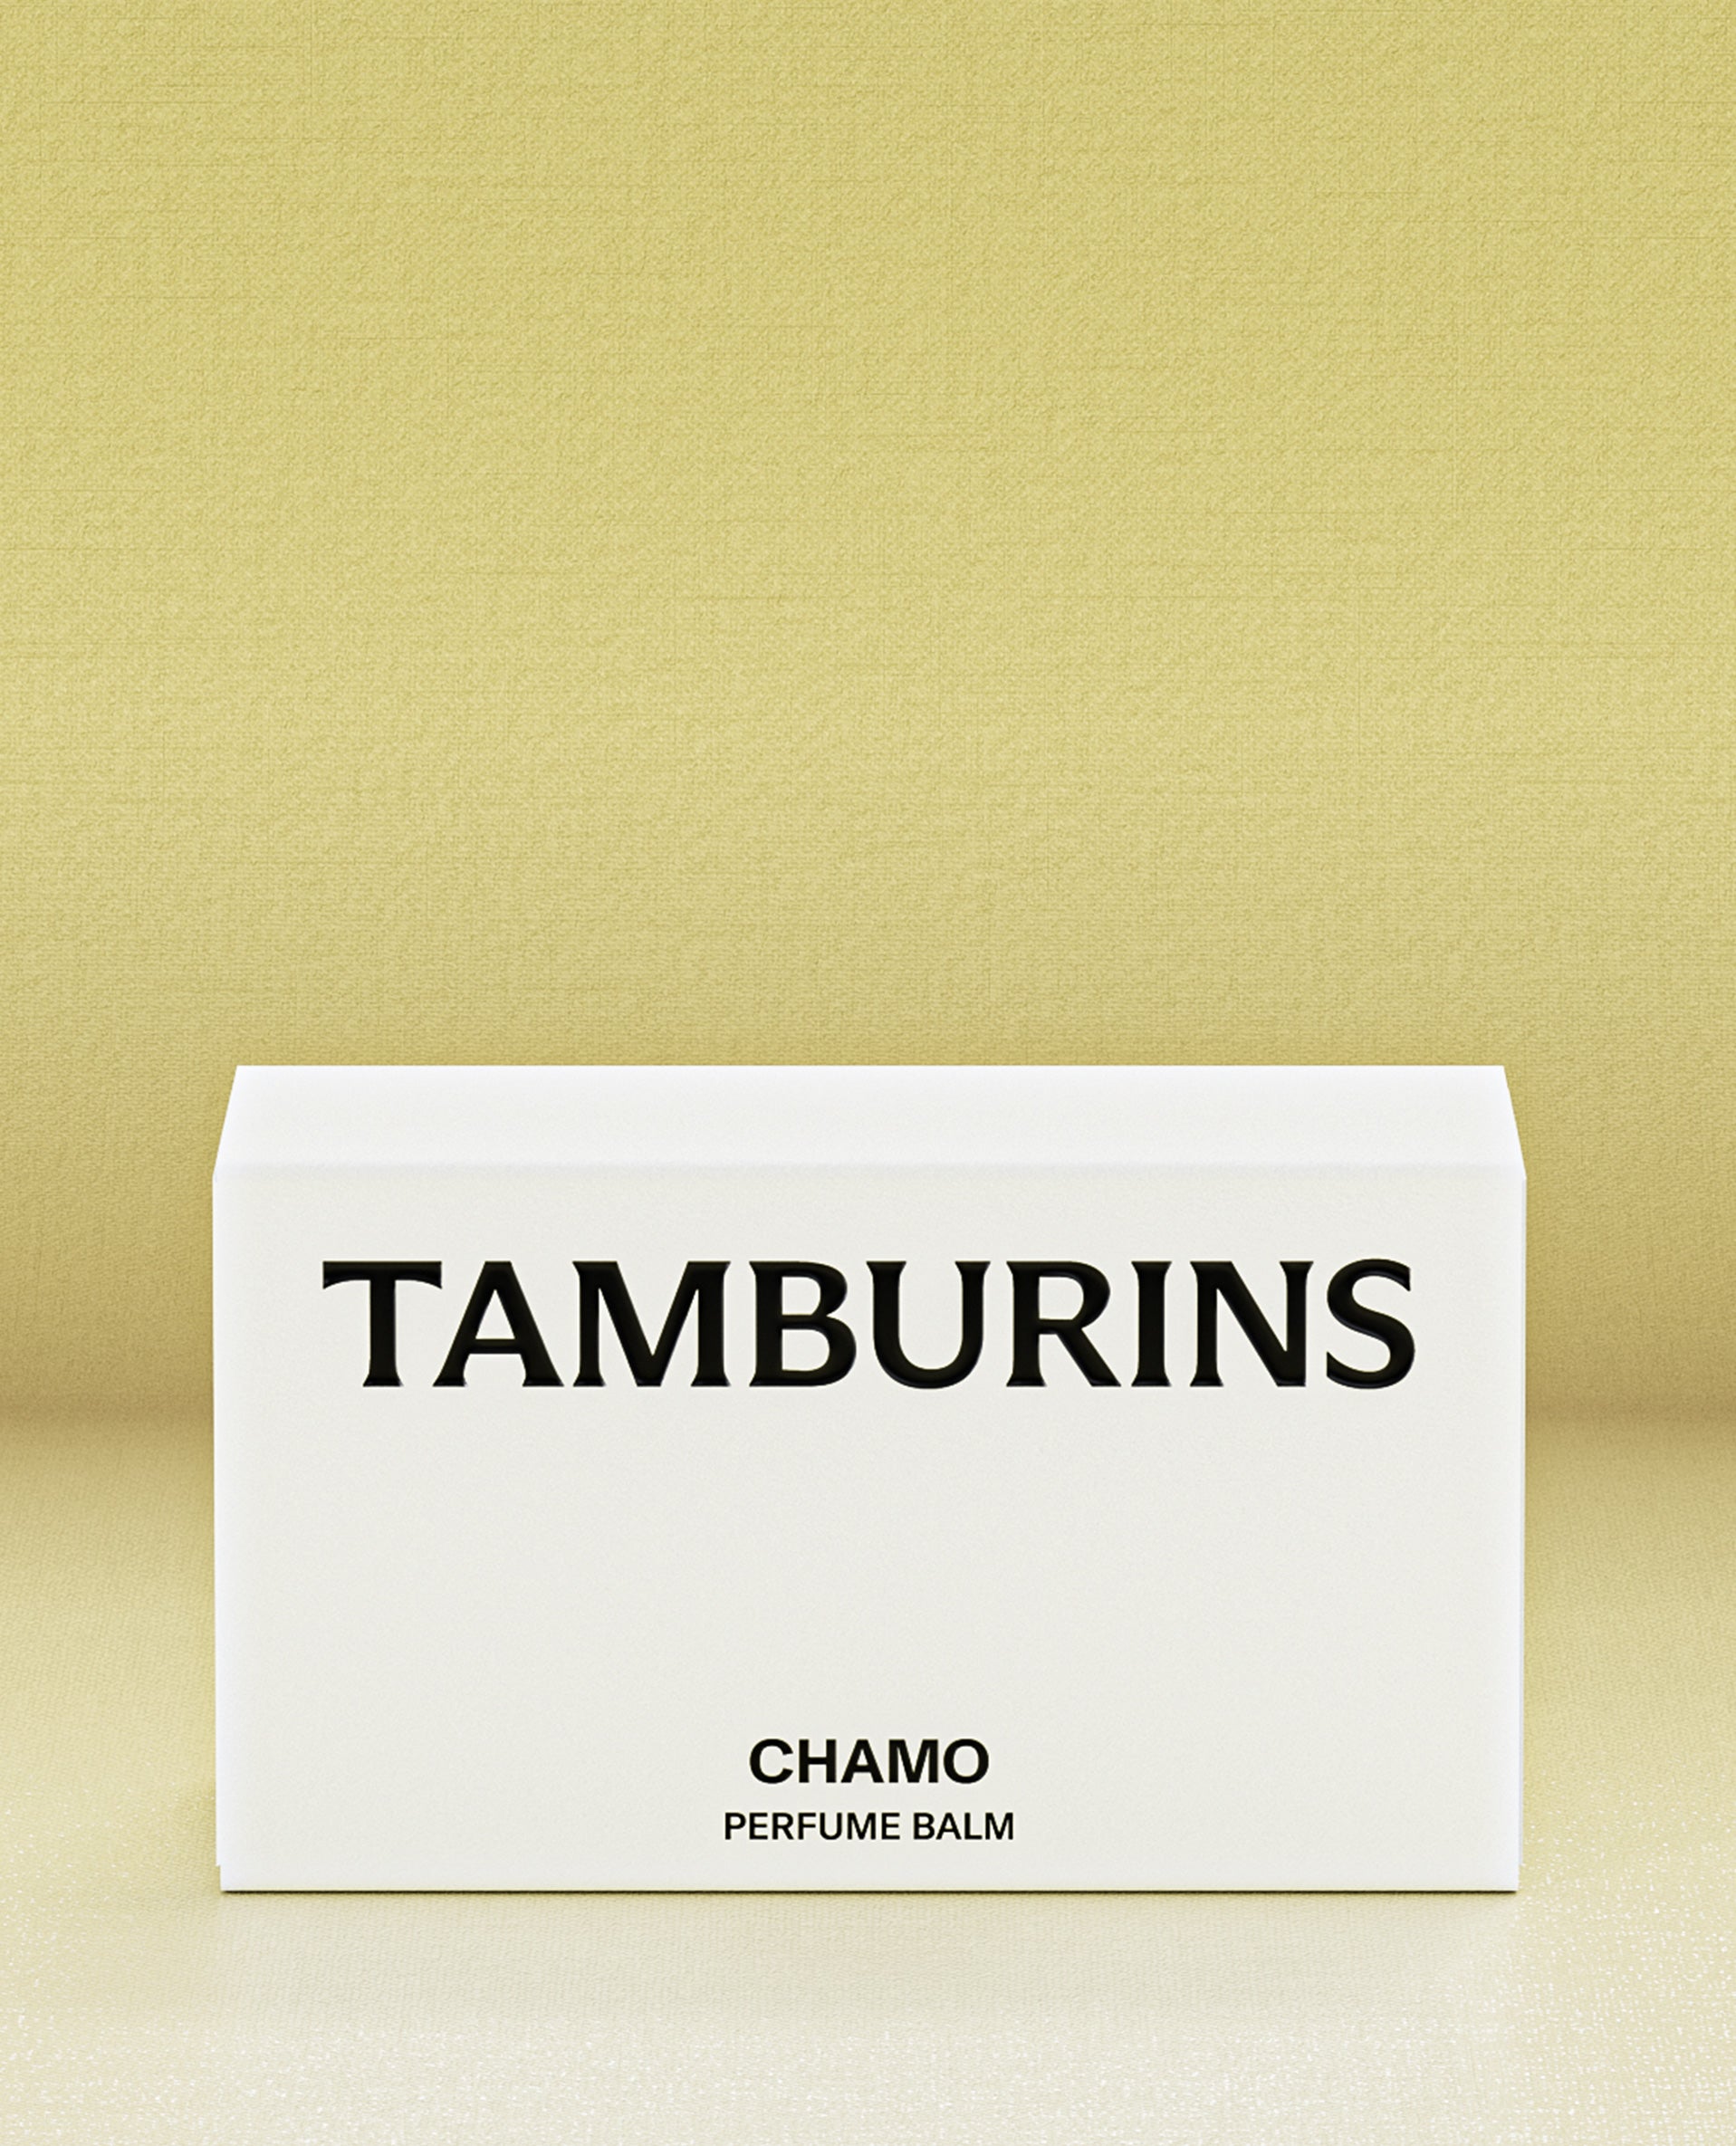 TAMBURINS Perfume Balm Chamo 6.5g